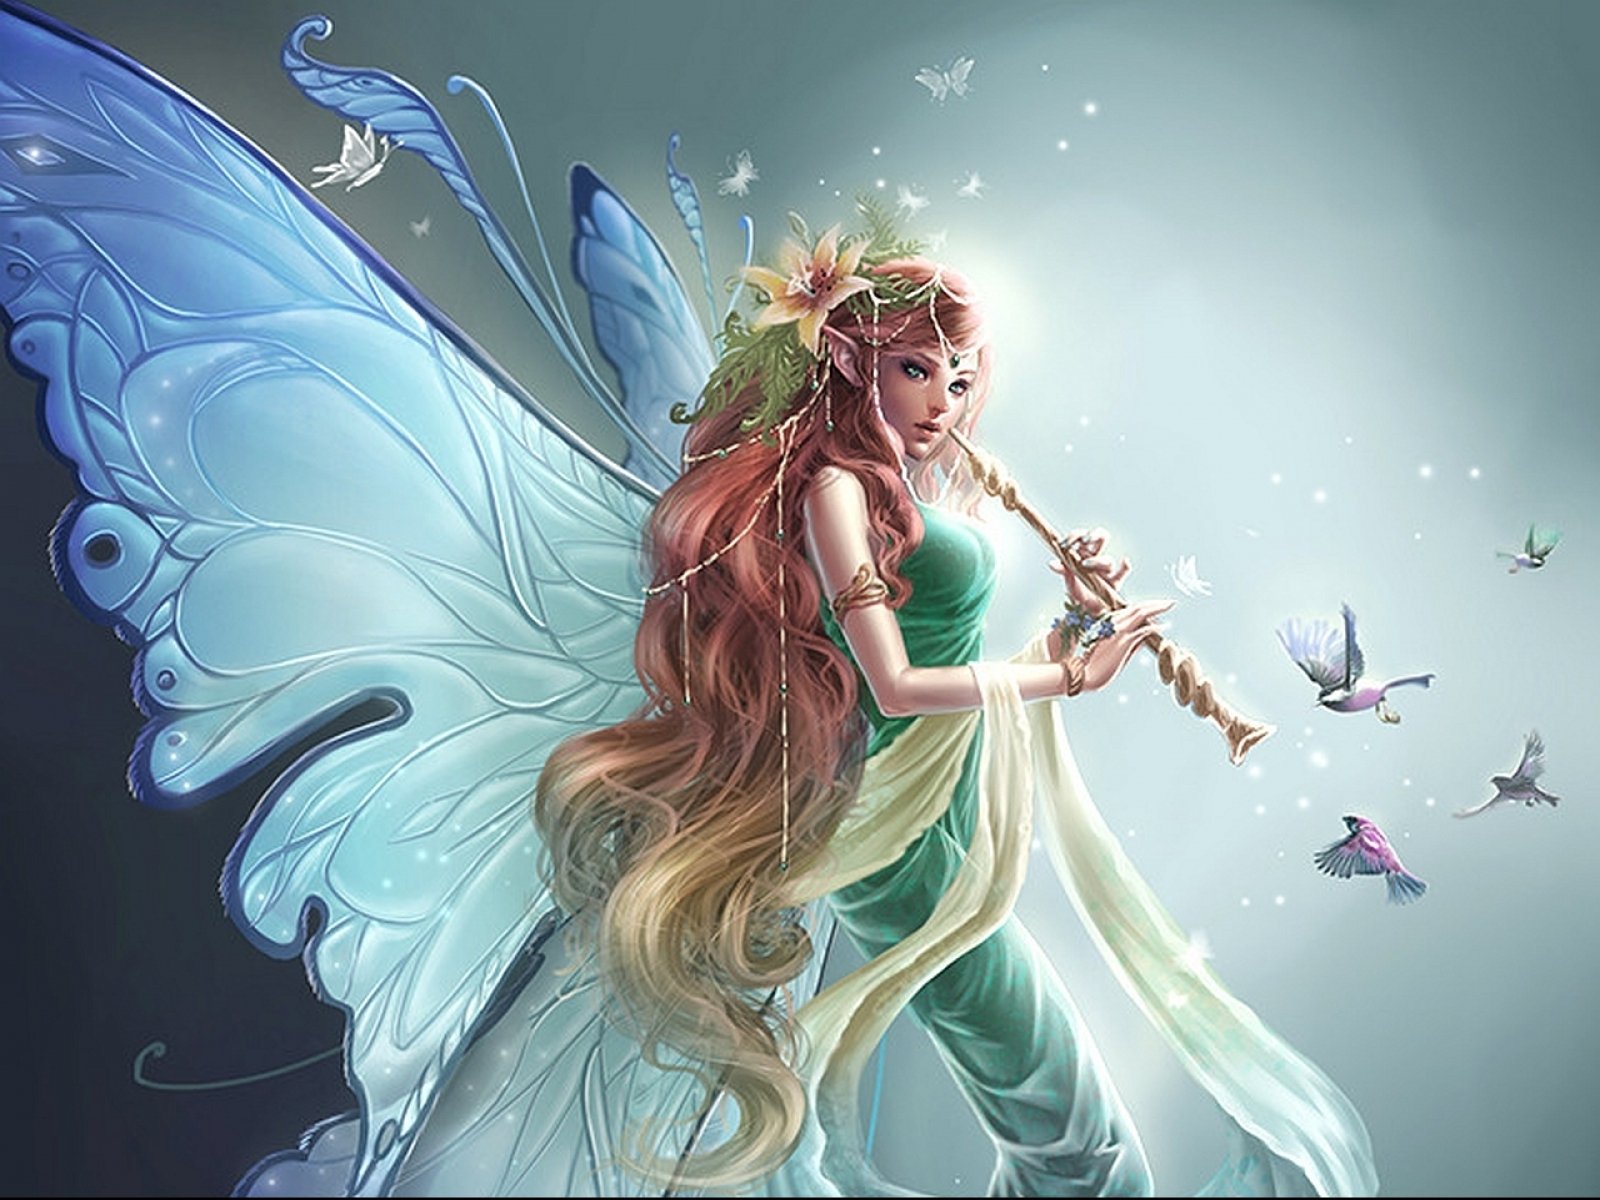 Fairy Fairies Fantasy Girl Art Artwork Wallpapers Hd Desktop And Mobile Backgrounds